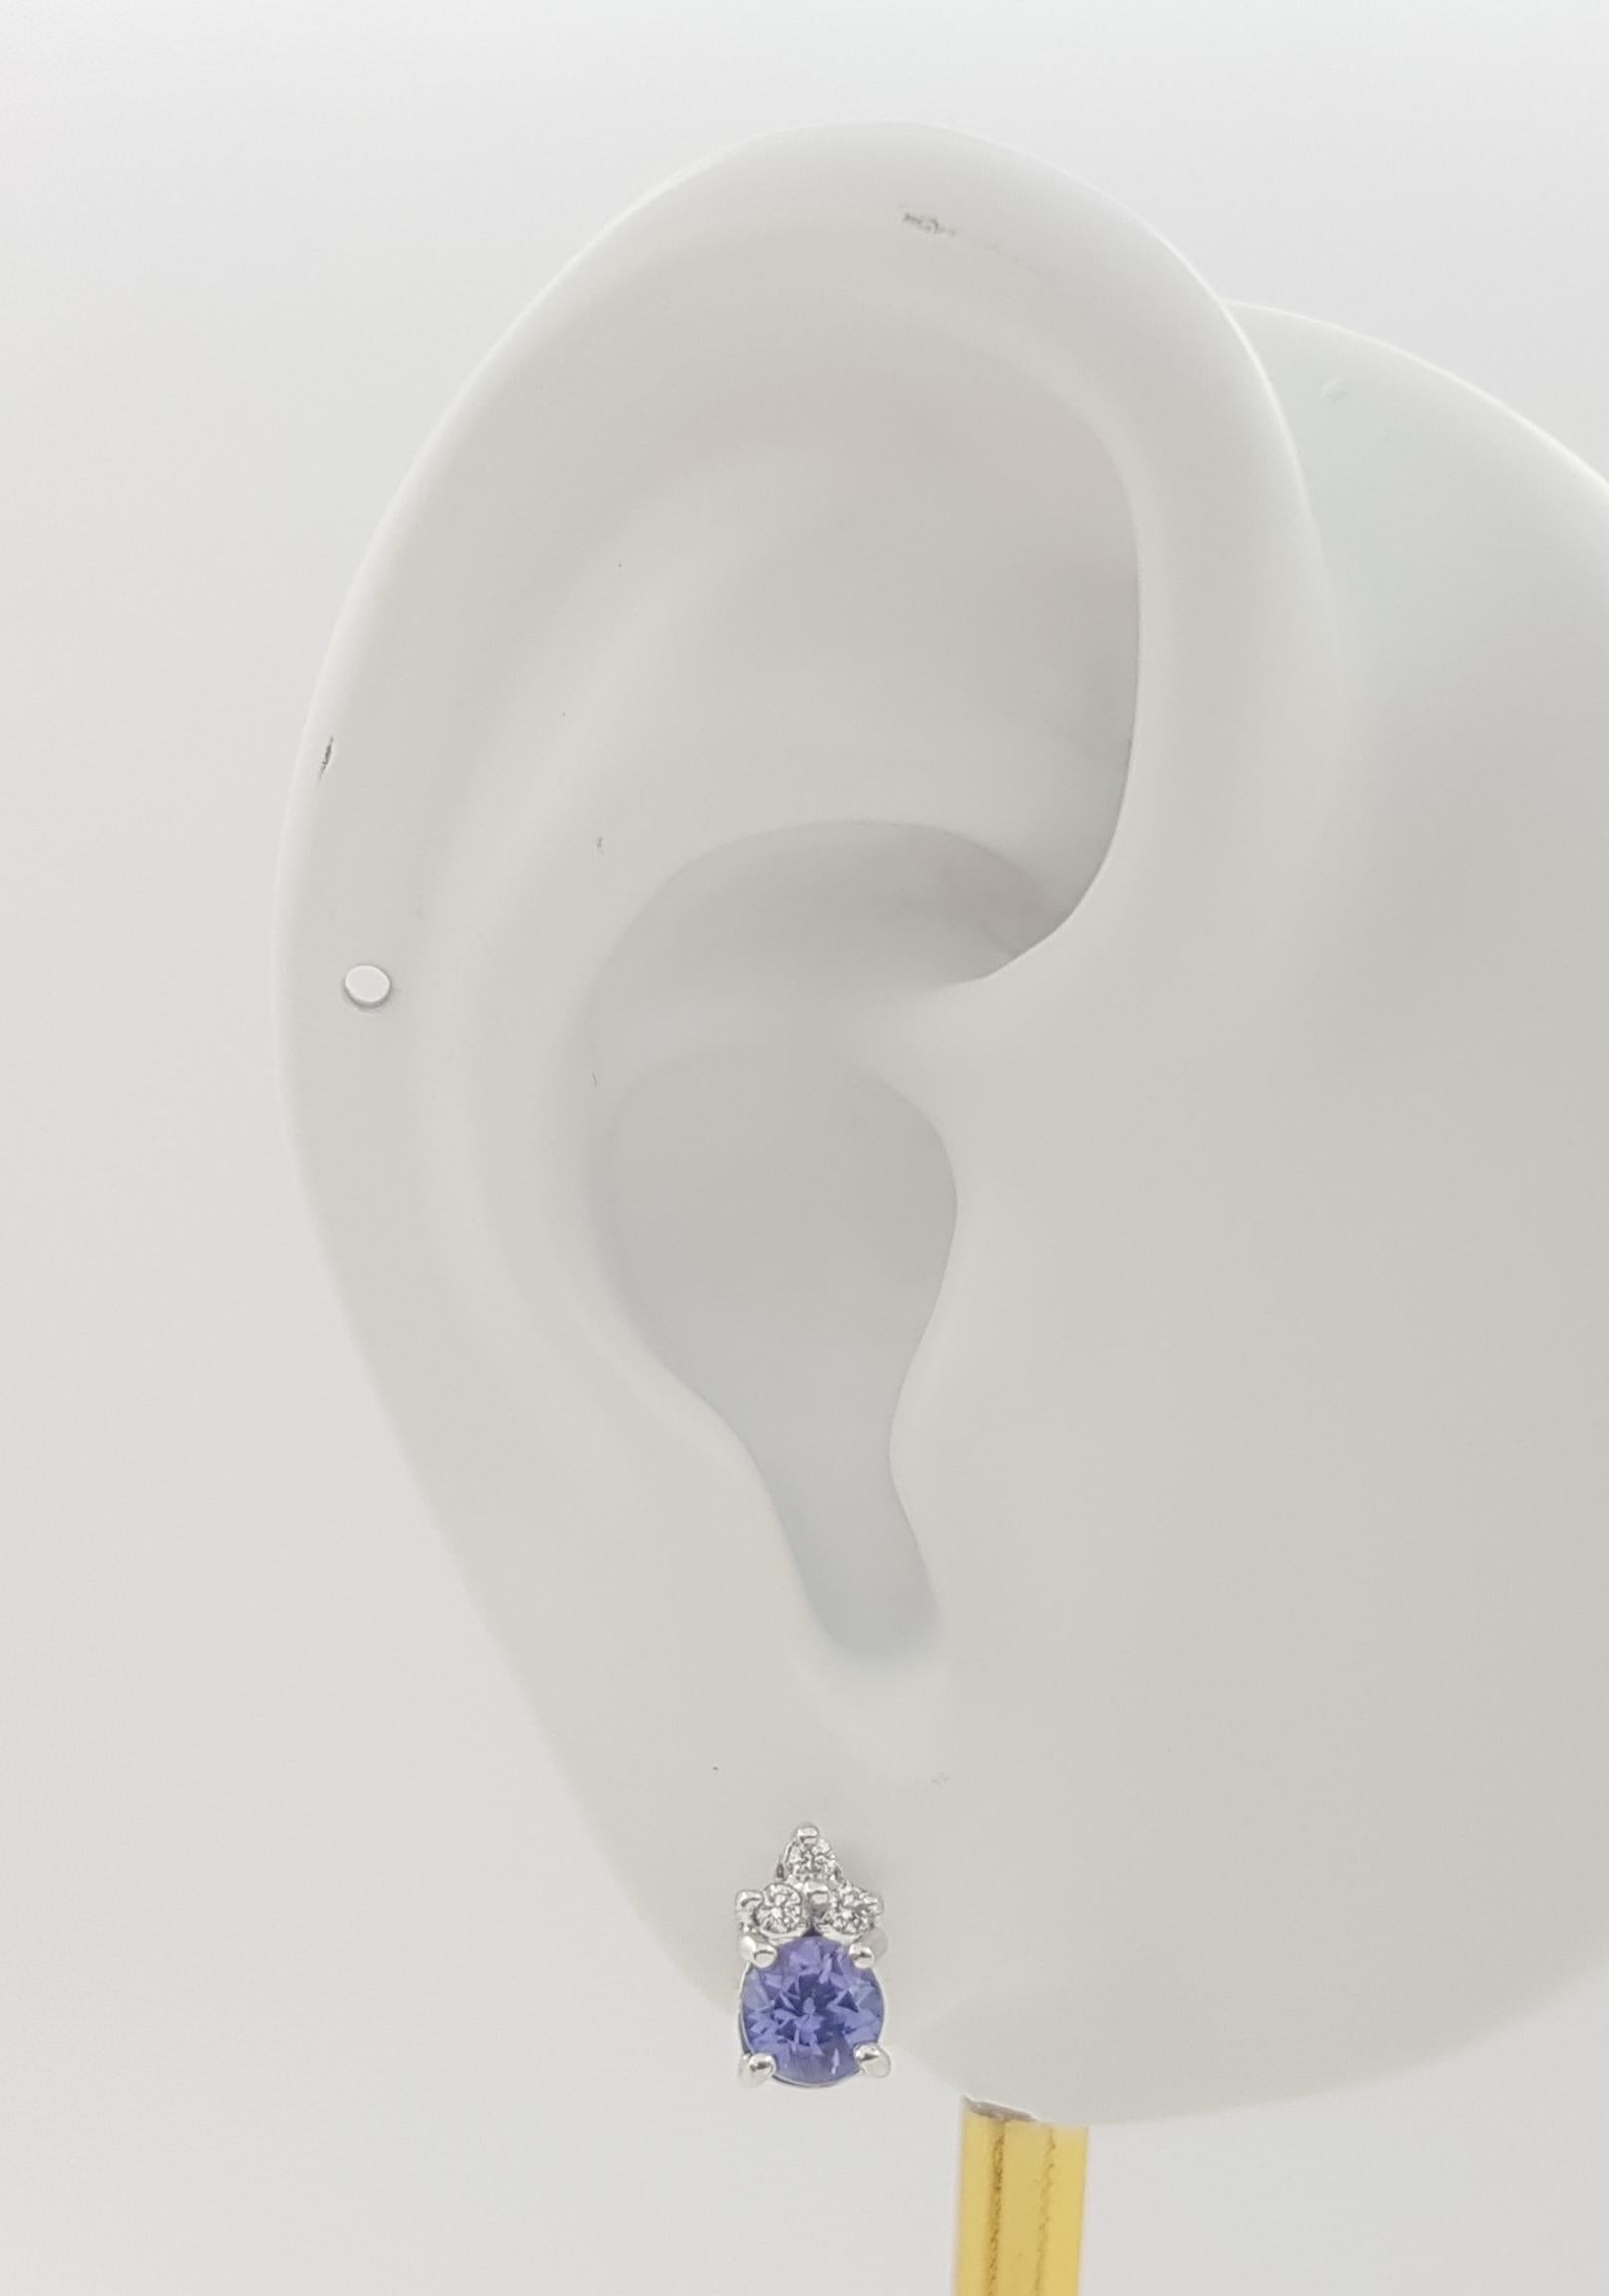 Tanzanite 0.83 carat with Diamond 0.06 carat Earrings set in 18K White Gold Settings

Width: 0.4 cm 
Length: 0.8 cm
Total Weight: 3.47 grams

